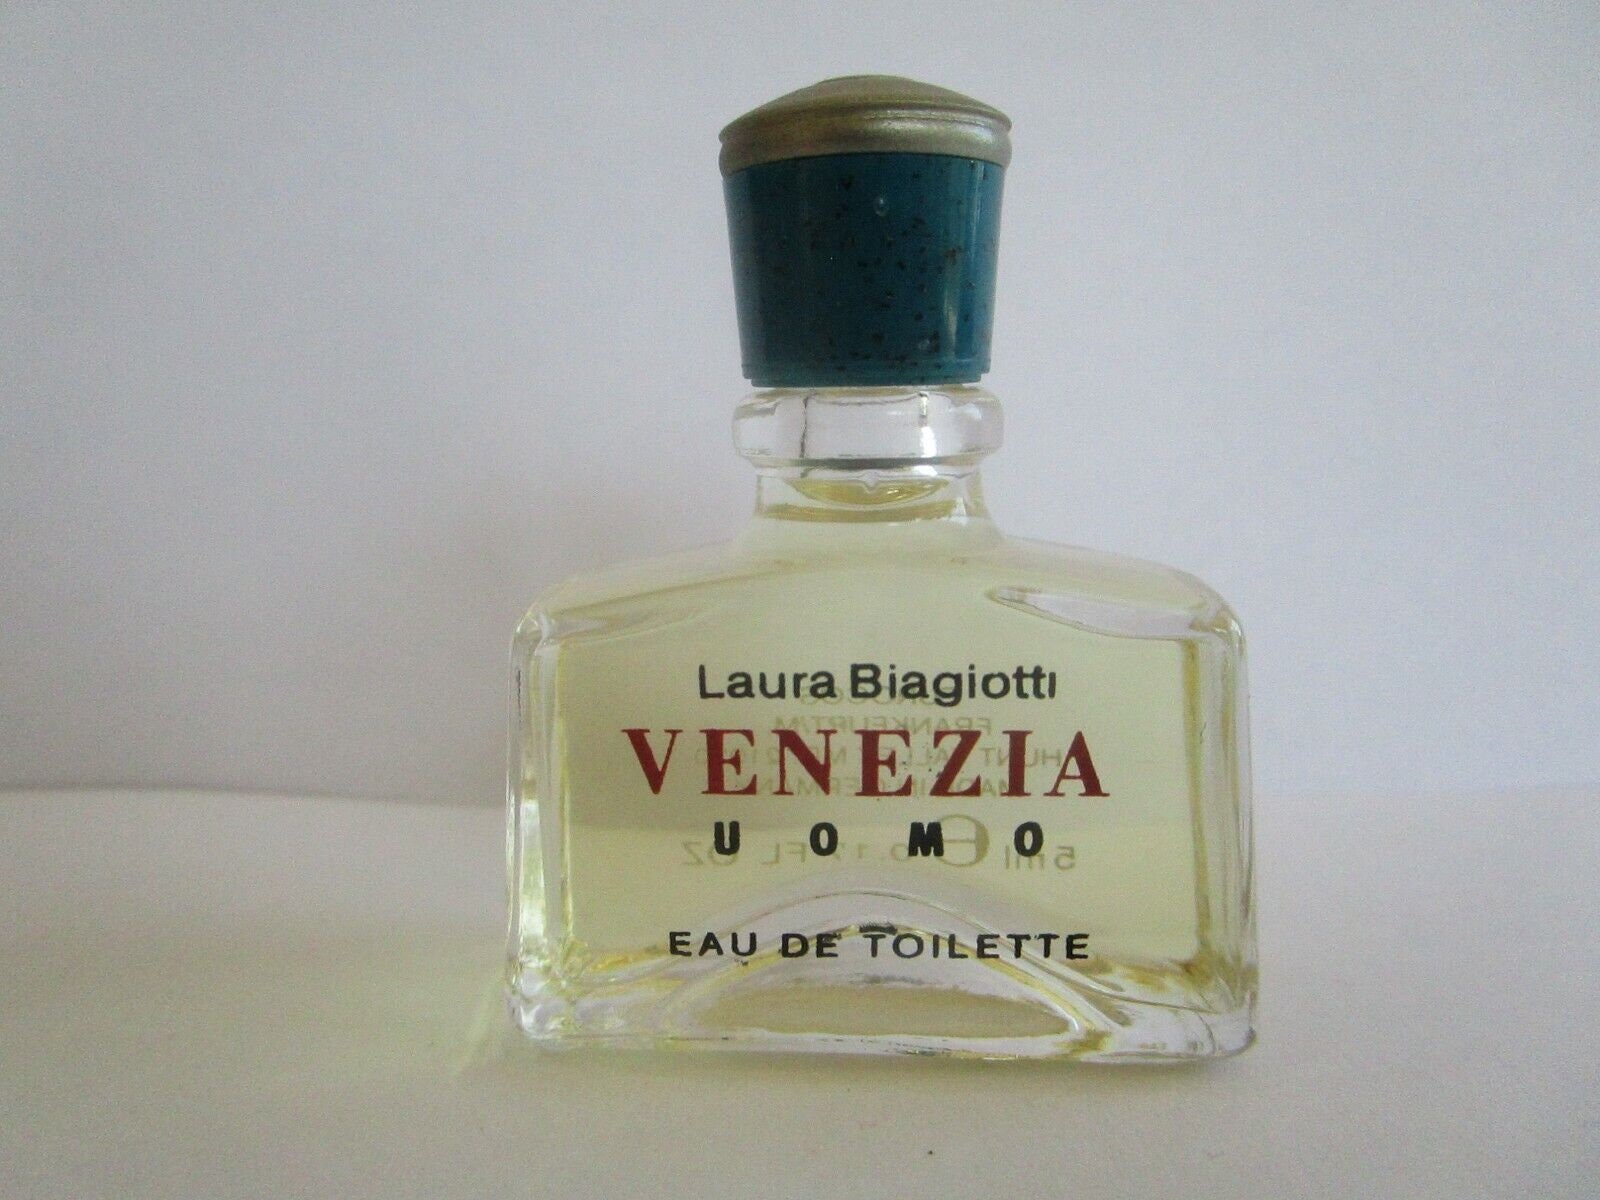 Venezia Laura Biagiotti edp 50 ml. Vintage first edition. – My old